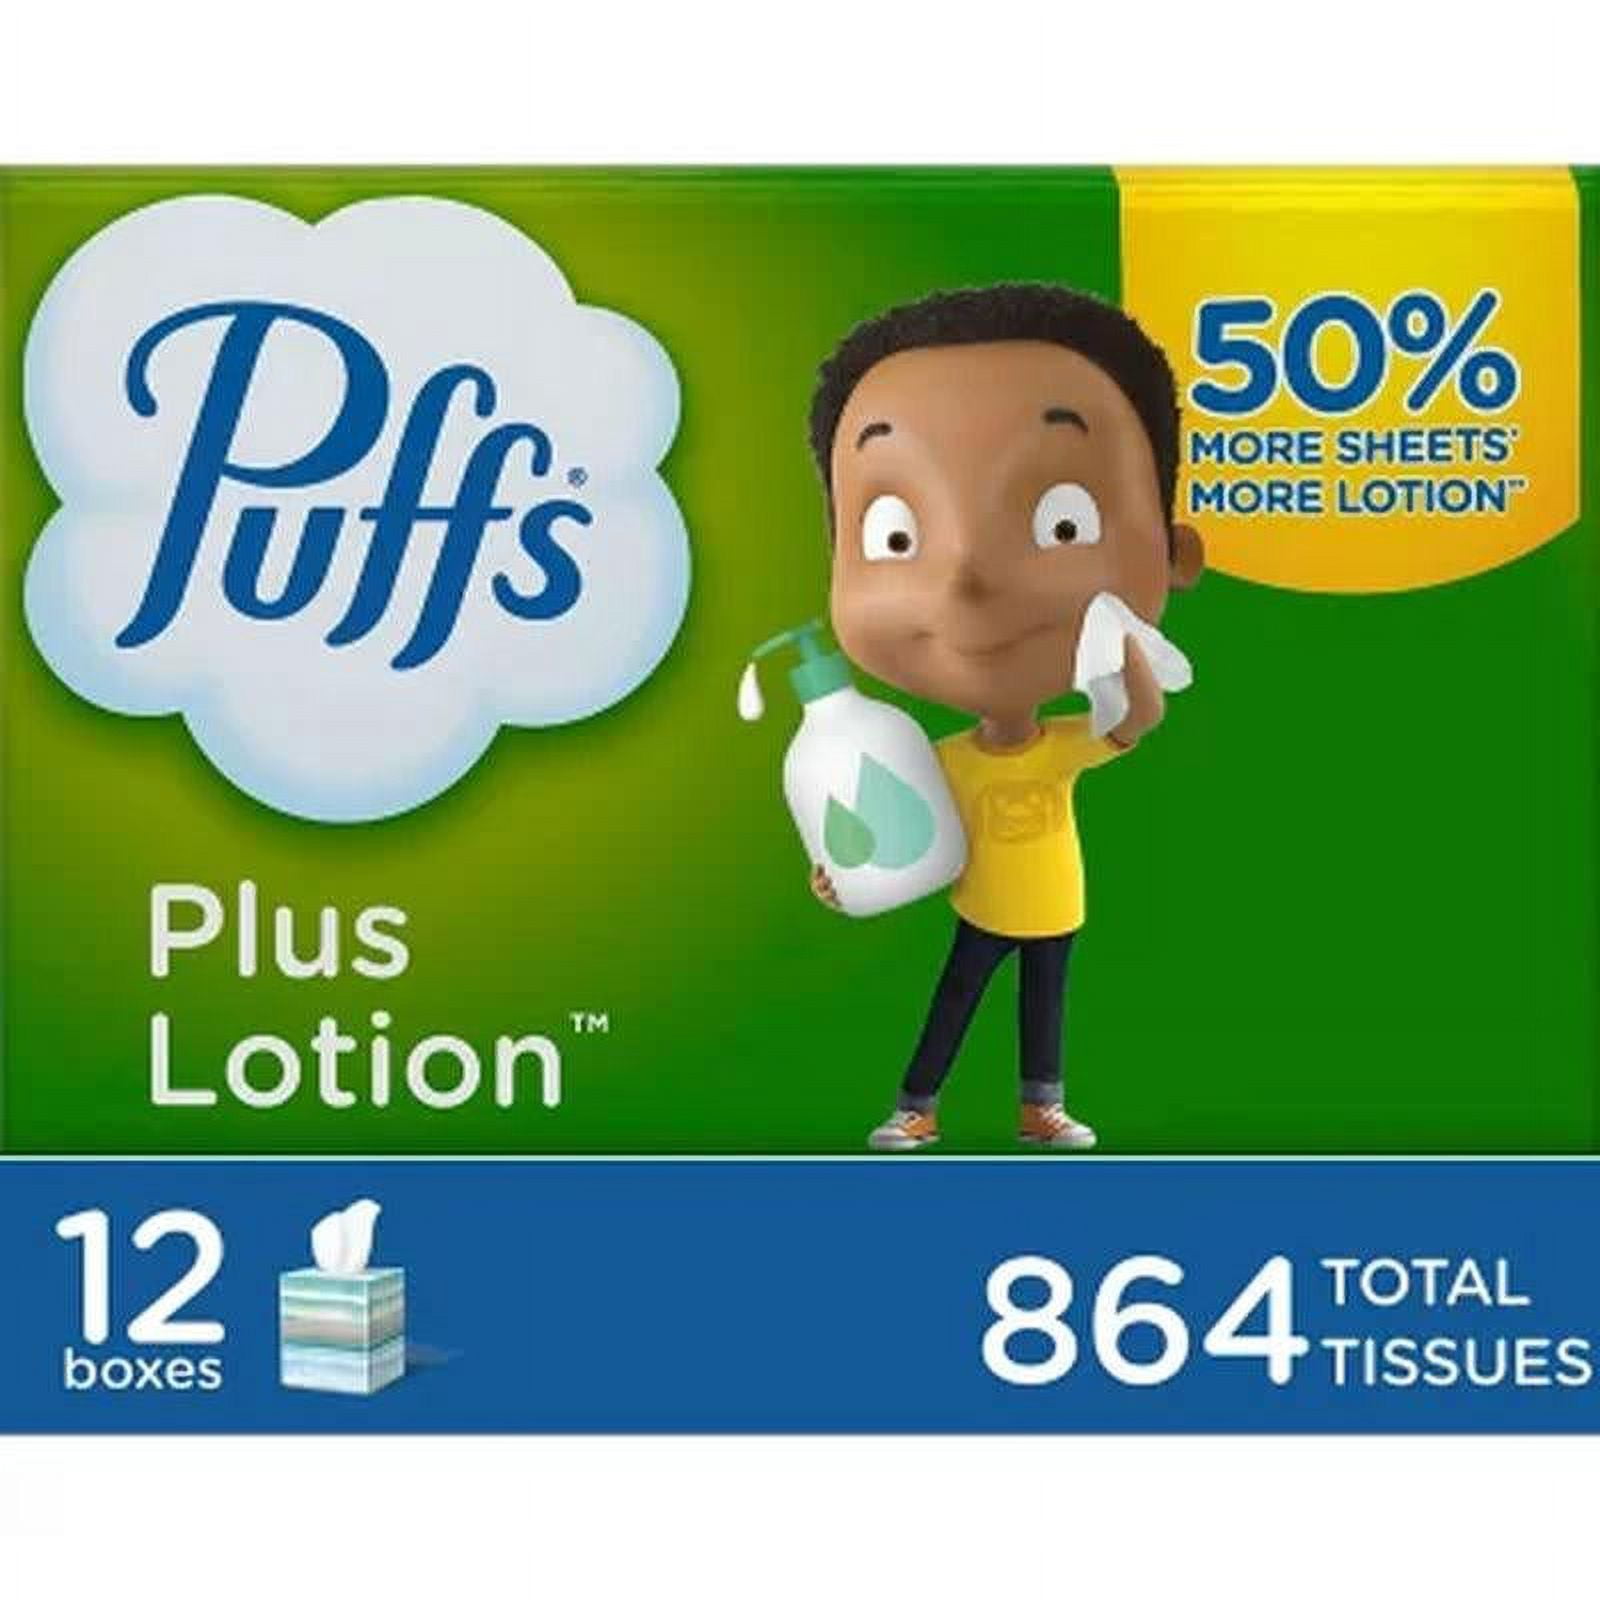 Puffs Plus Lotion Facial Tissues, 8 Family Boxes, 120 Tissues per Box